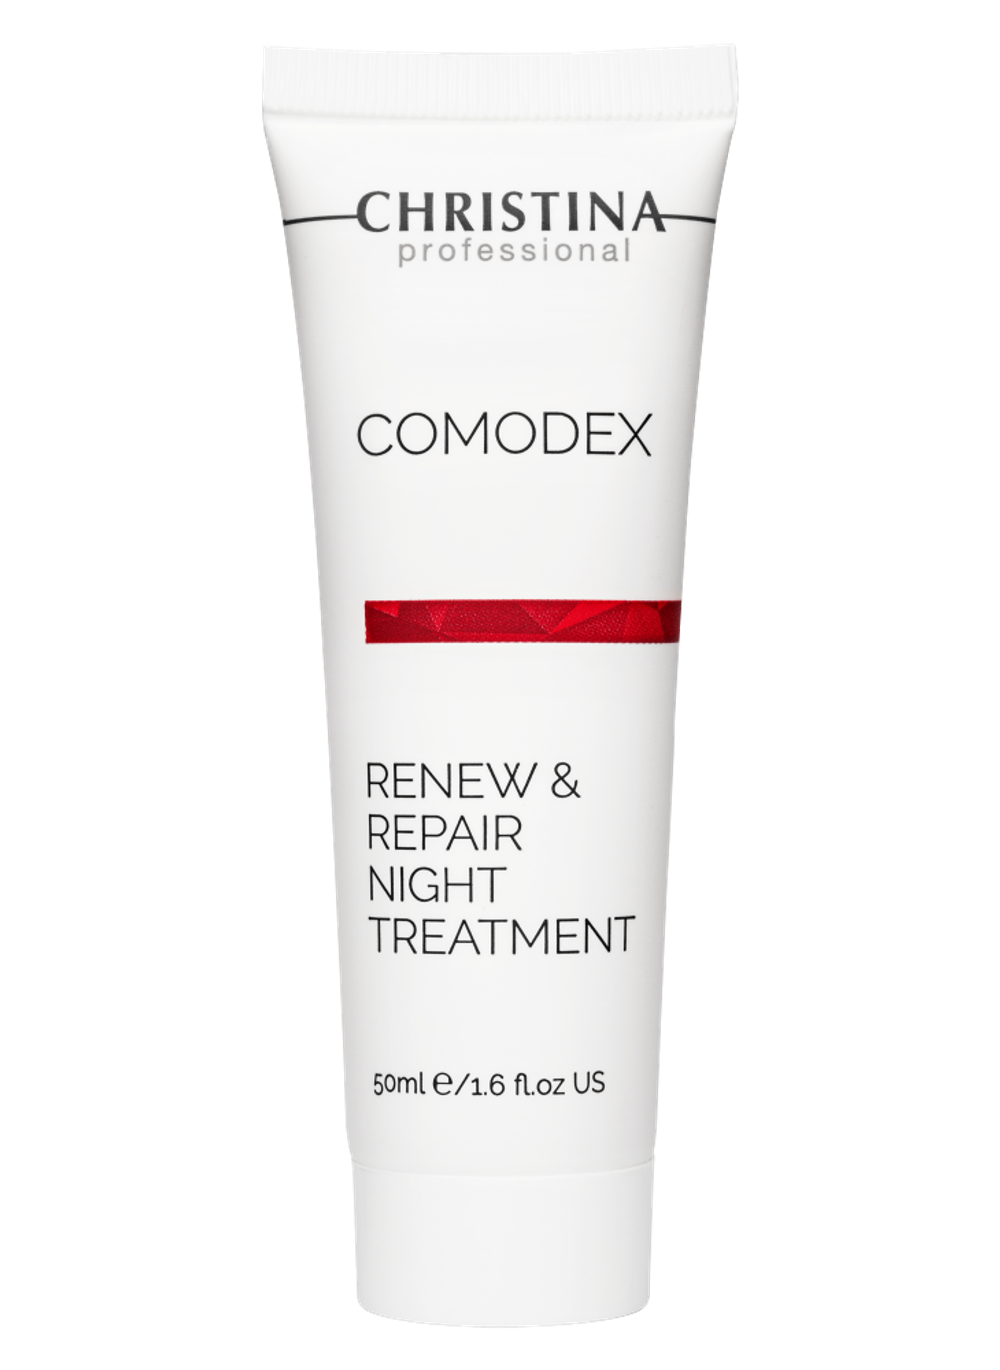 CHRISTINA Comodex Renew & Repair Night Treatment